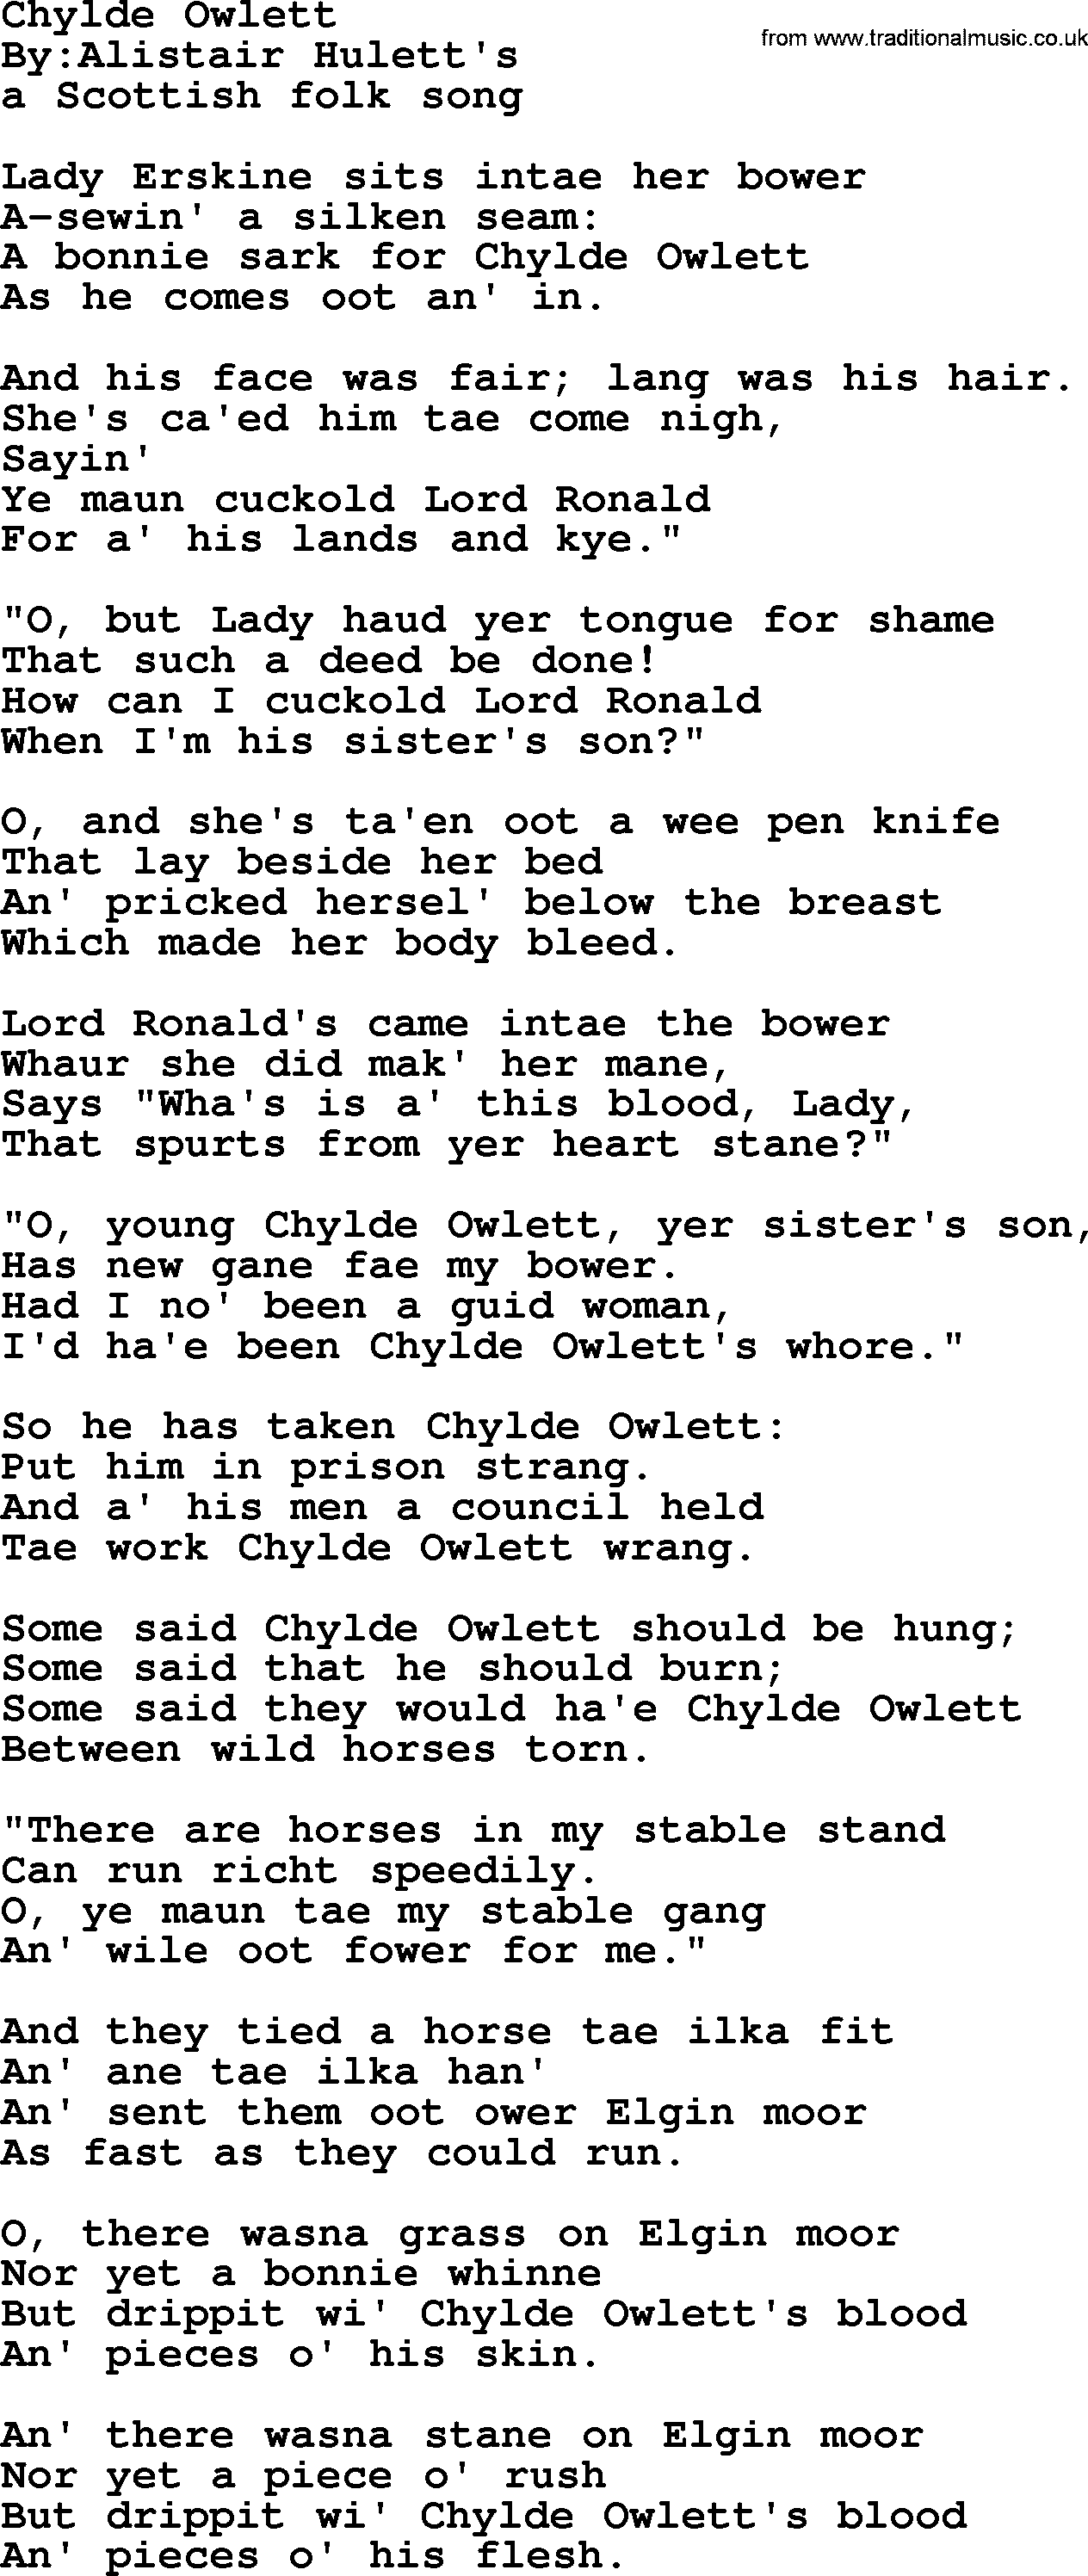 Political, Solidarity, Workers or Union song: Chylde Owlett, lyrics